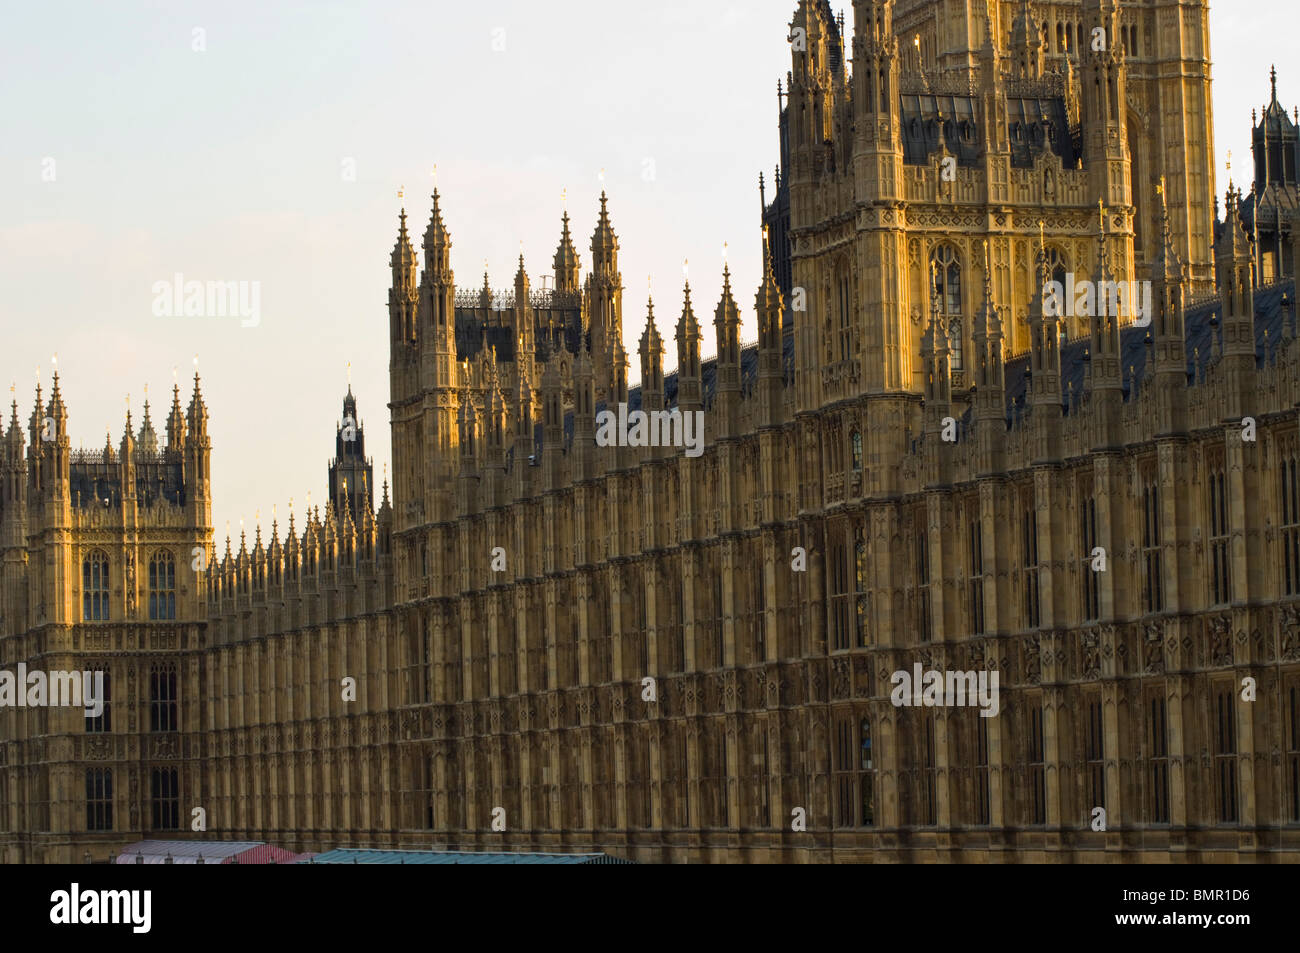 Der Palace of Westminster und dem Uhrturm Turm berühmt als Big Ben. Stockfoto